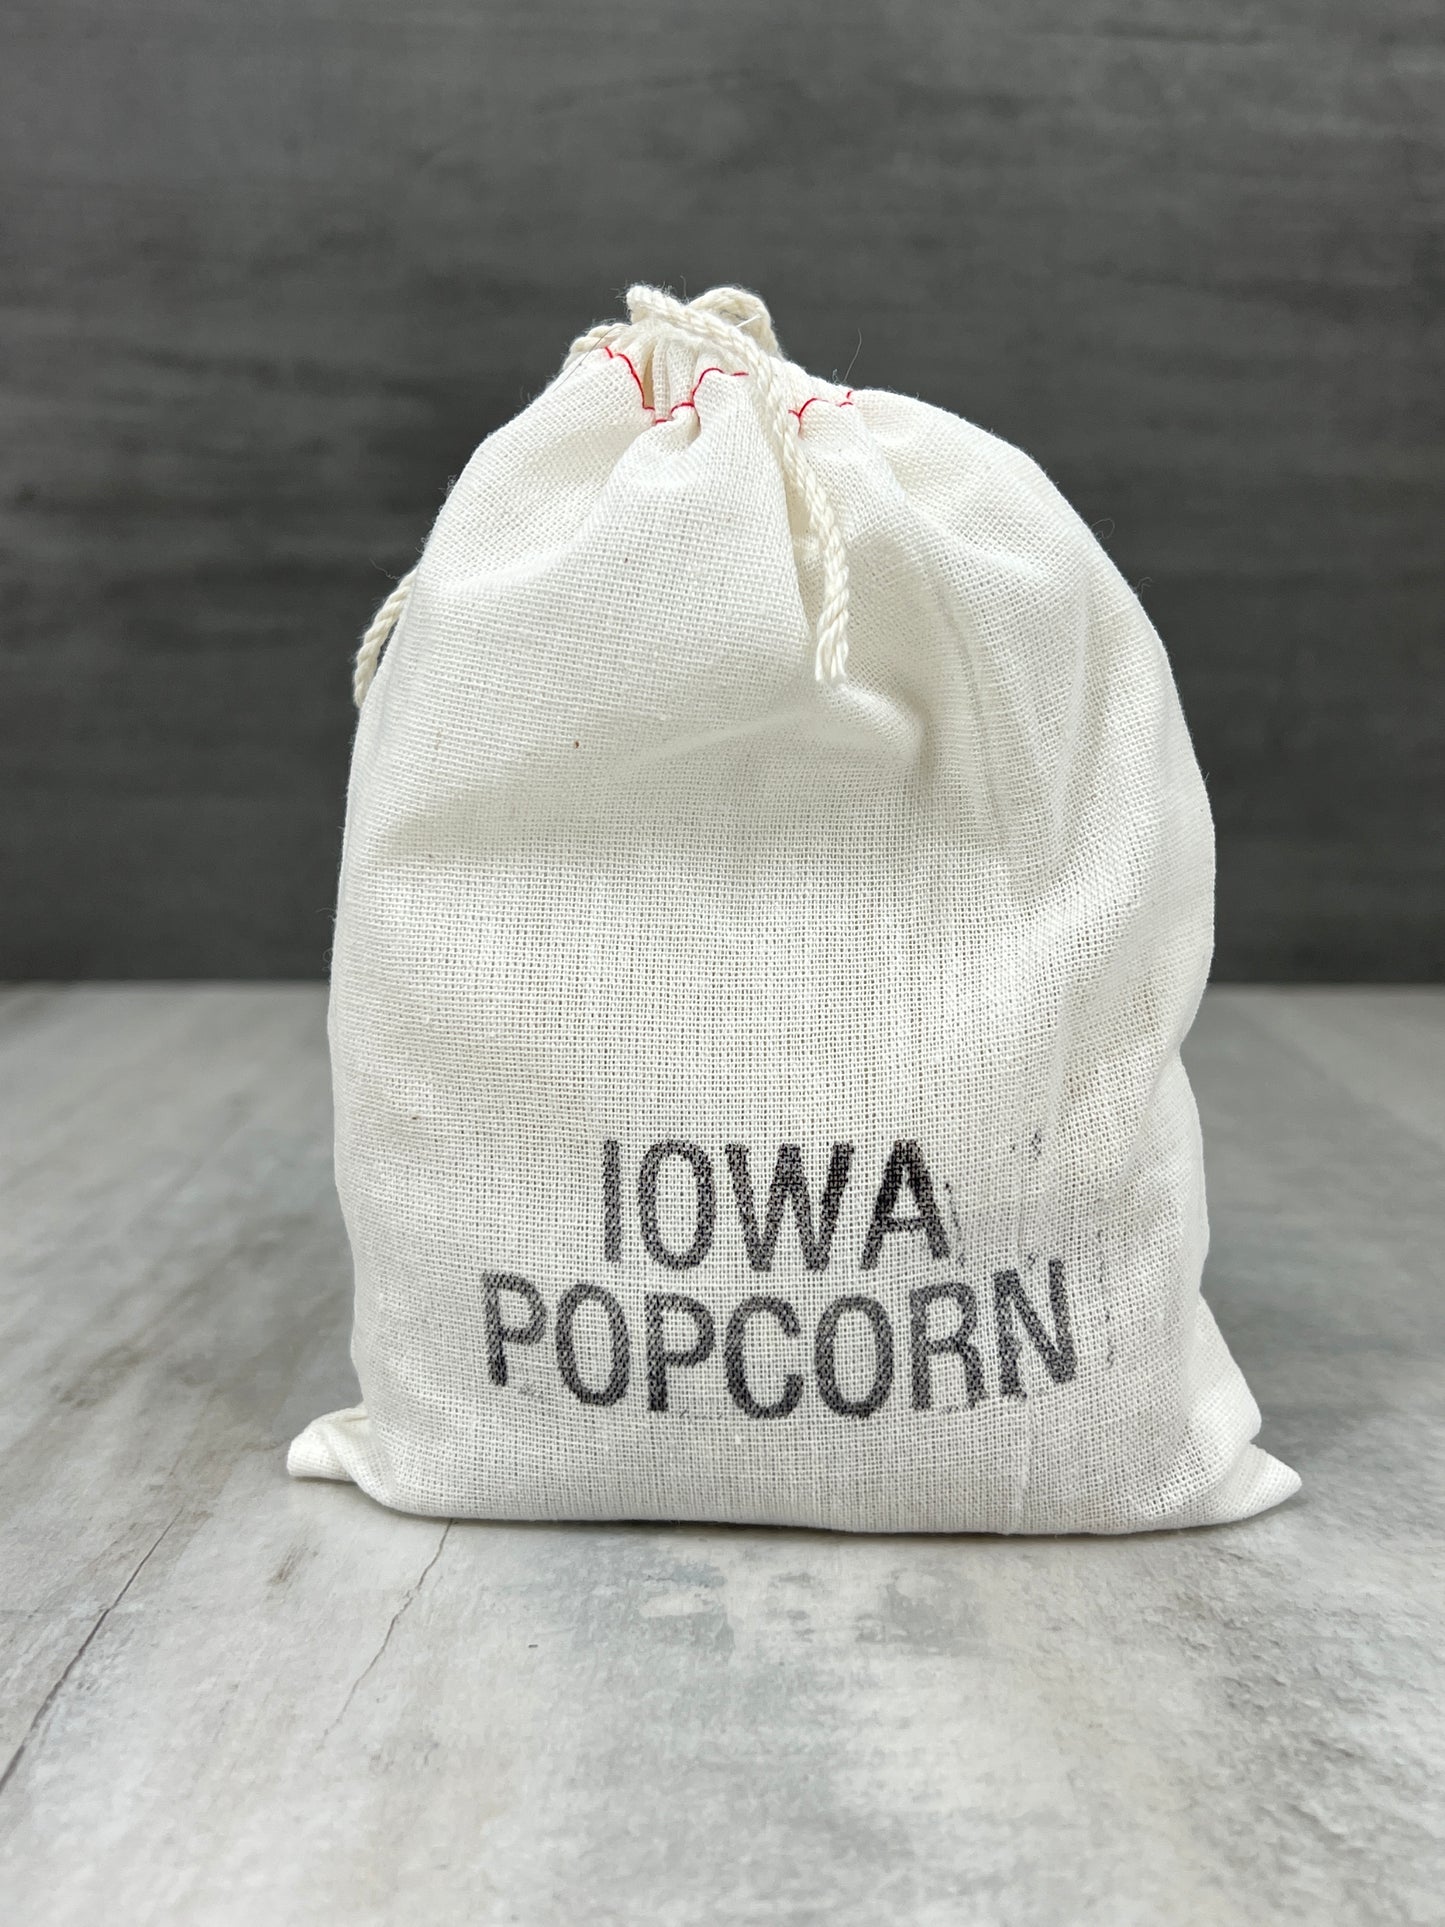 Iowa Popcorn in Burlap Bag (12 oz)